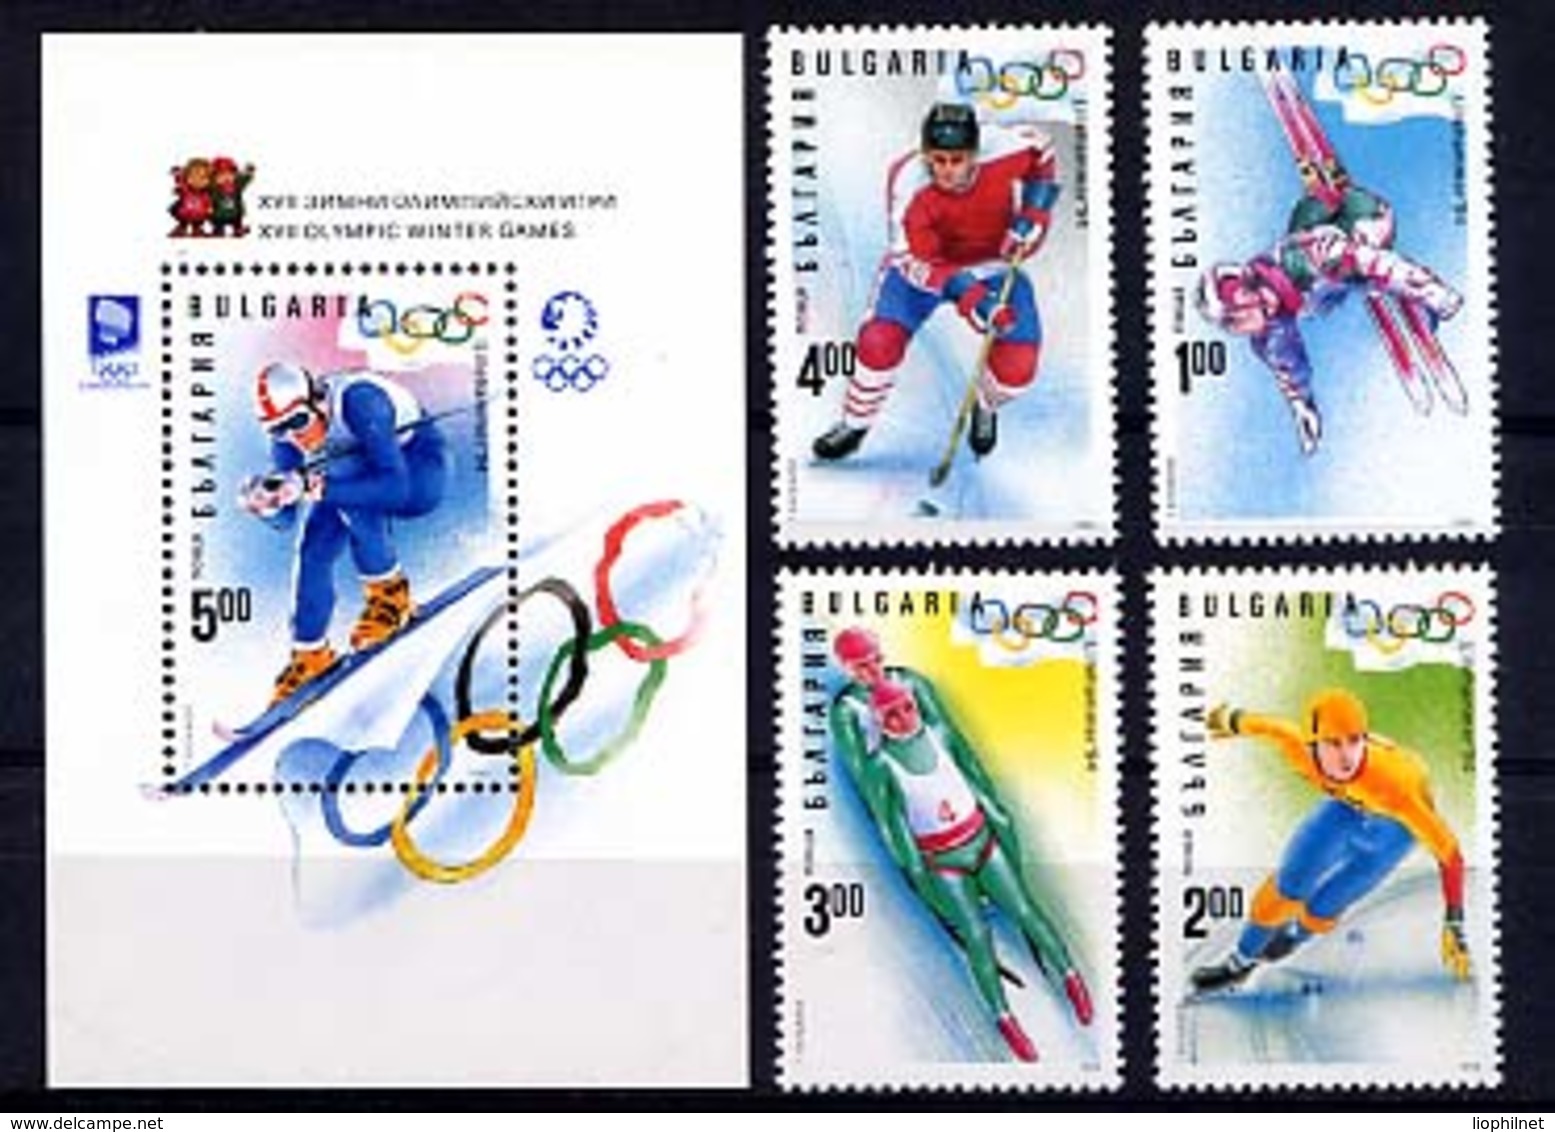 BULGARIE 1994, Lillehammer, Epreuves De Ski, 4 Valeurs + 1 Bloc, Neufs / Mint. R1117 - Hiver 1994: Lillehammer